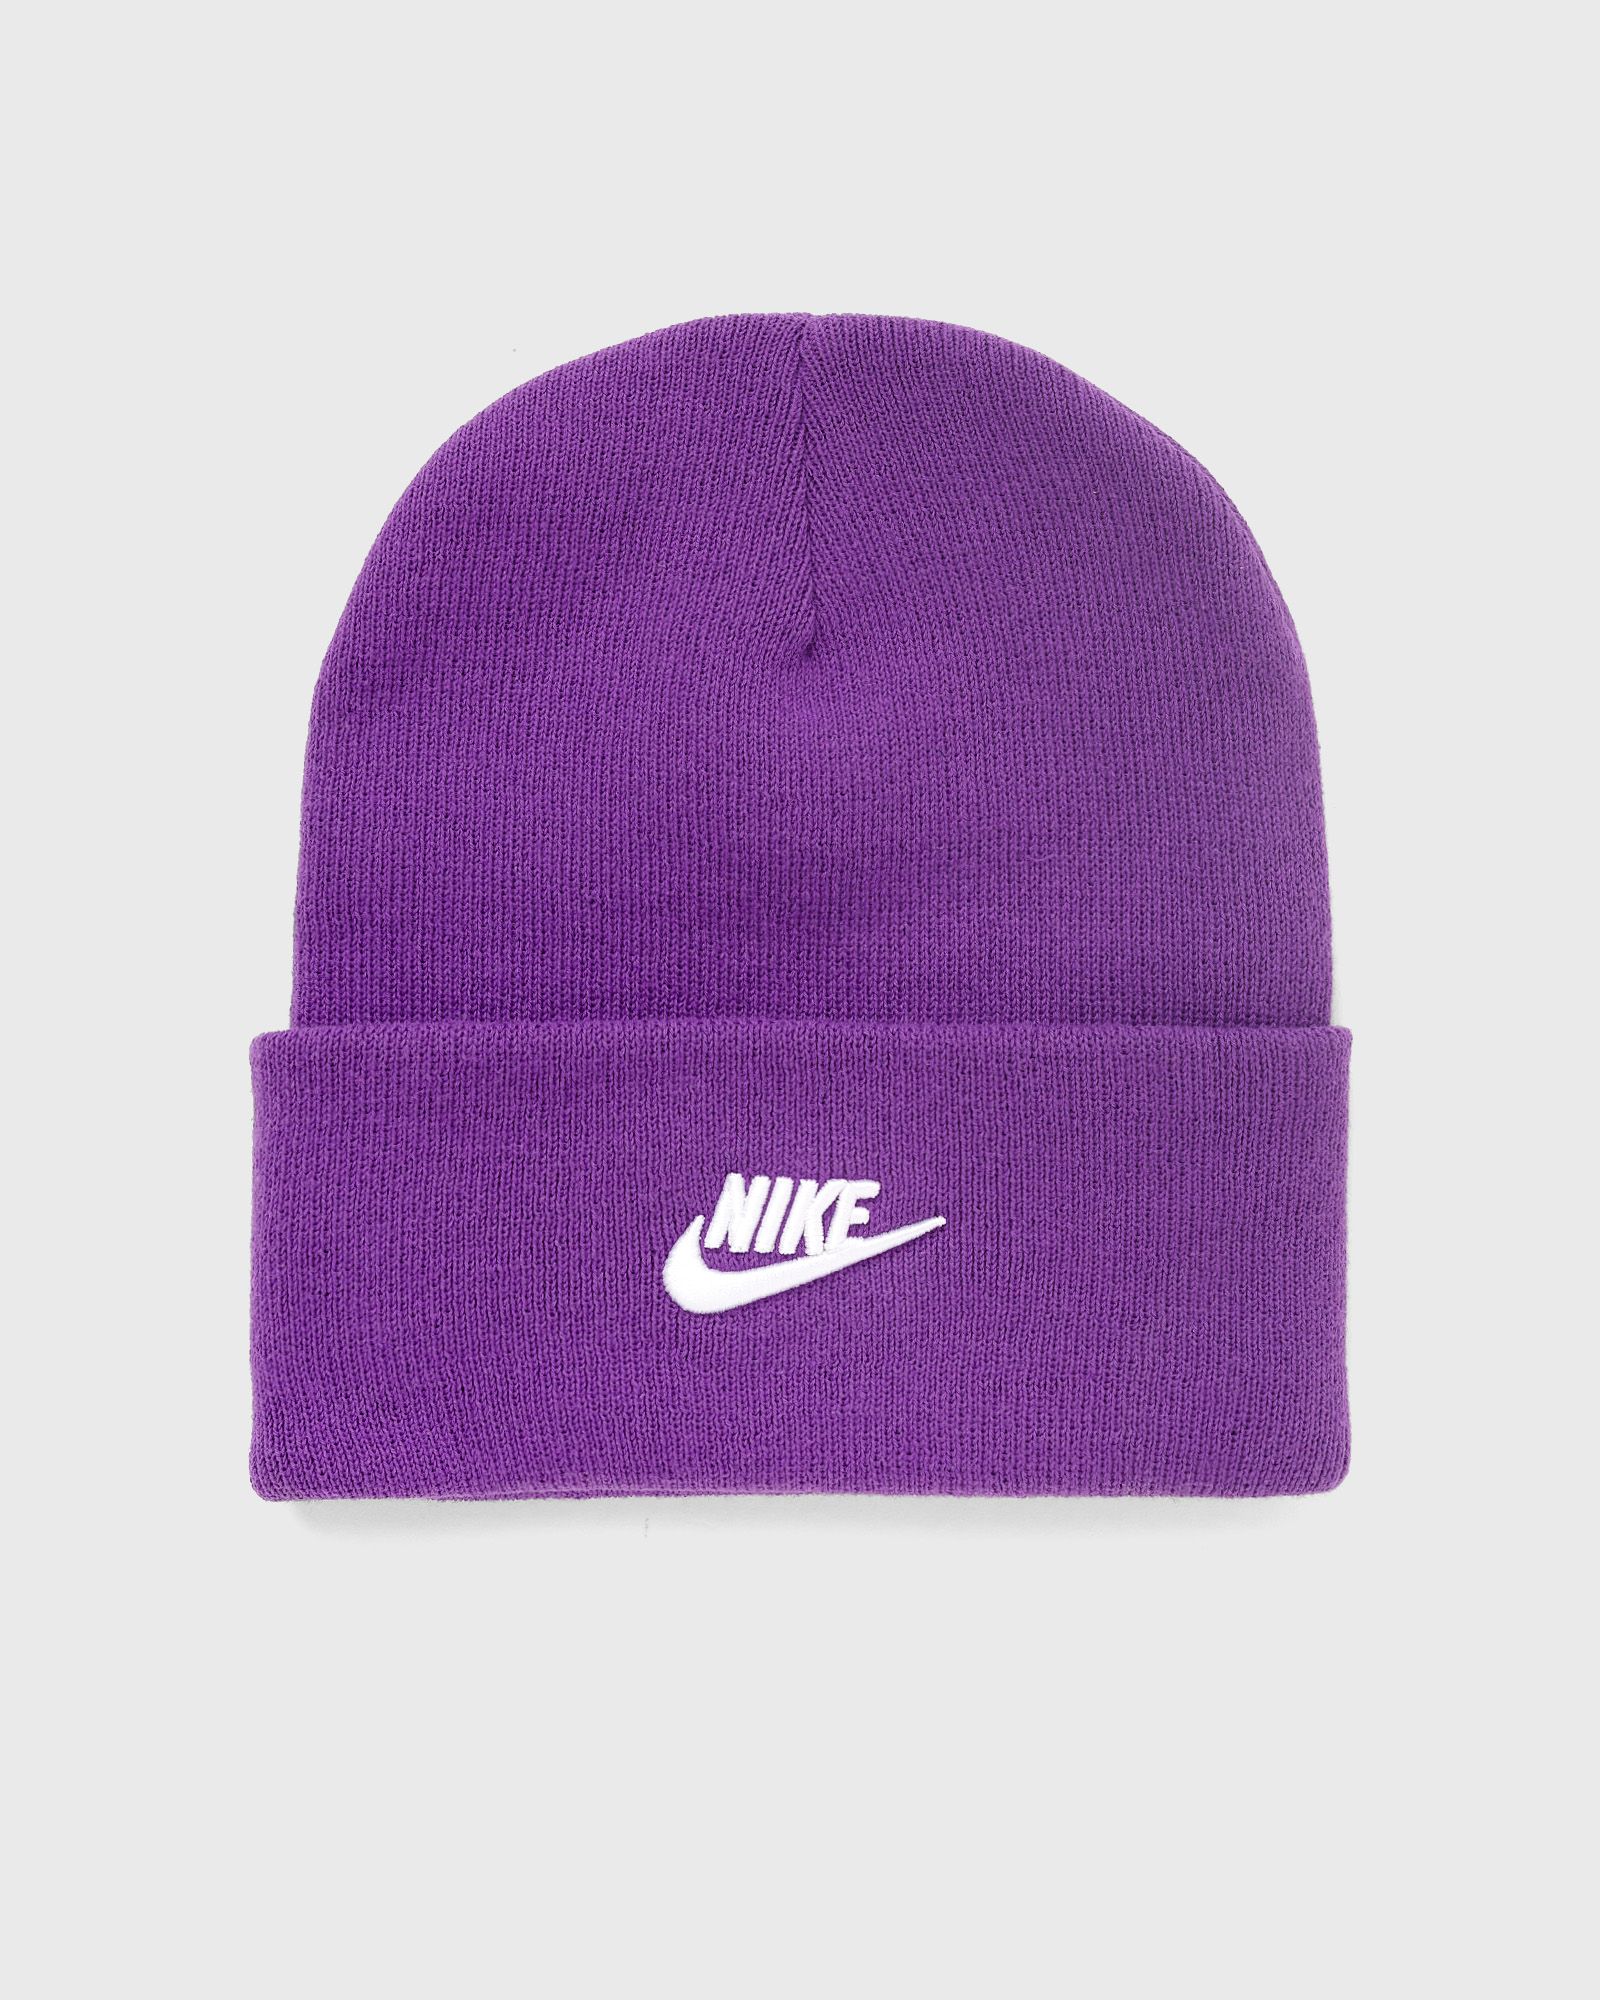 Nike - peak tall cuff futura beanie men beanies purple in größe:one size